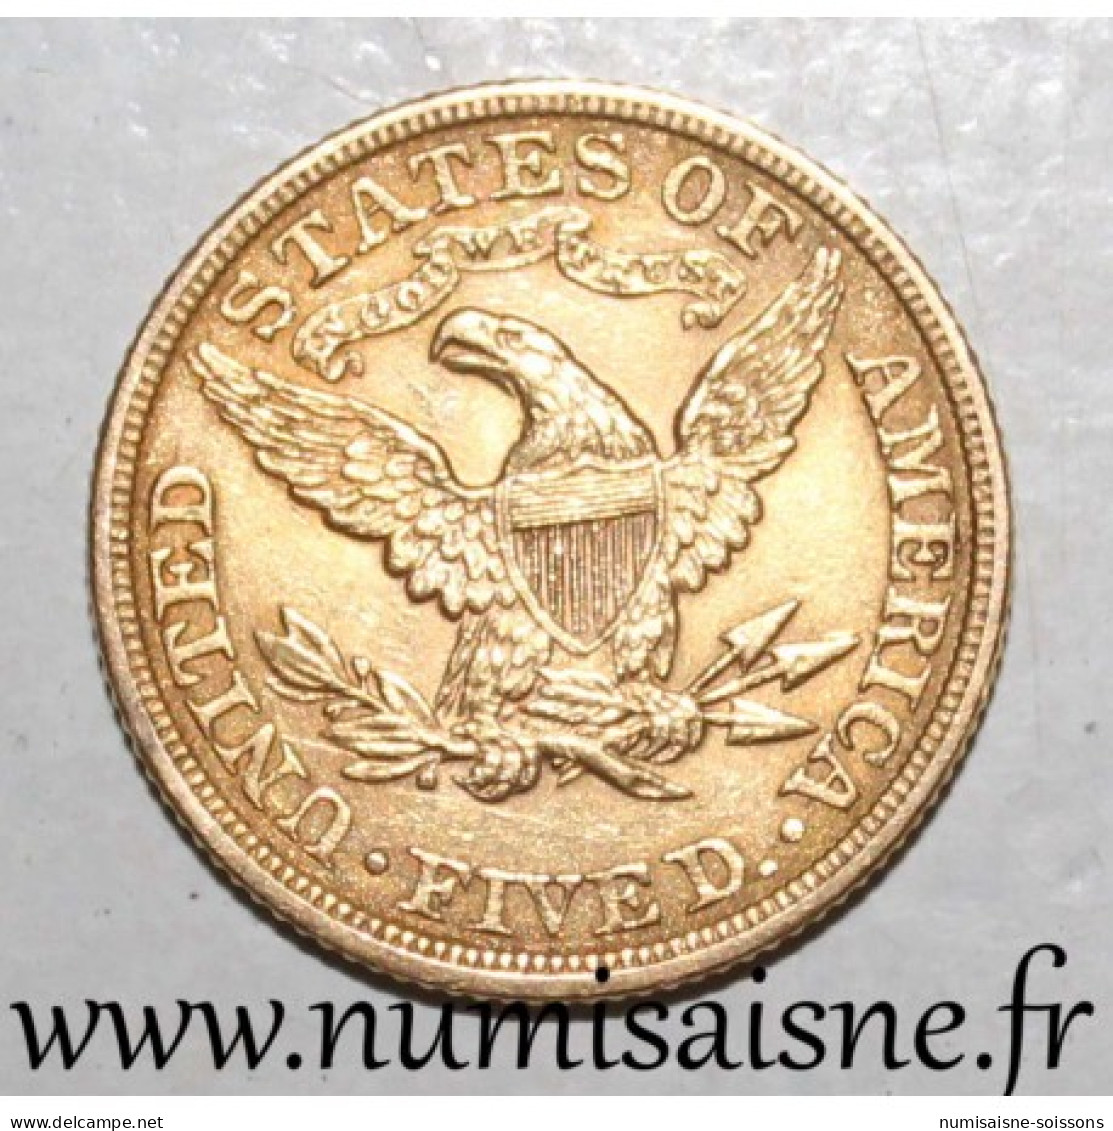 ÉTATS UNIS - KM 101 - 5 DOLLARS 1899 - Philadelphie - LIBERTY - OR - TTB - 5$ - Half Eagles - 1866-1908: Coronet Head (Testa Coronata)